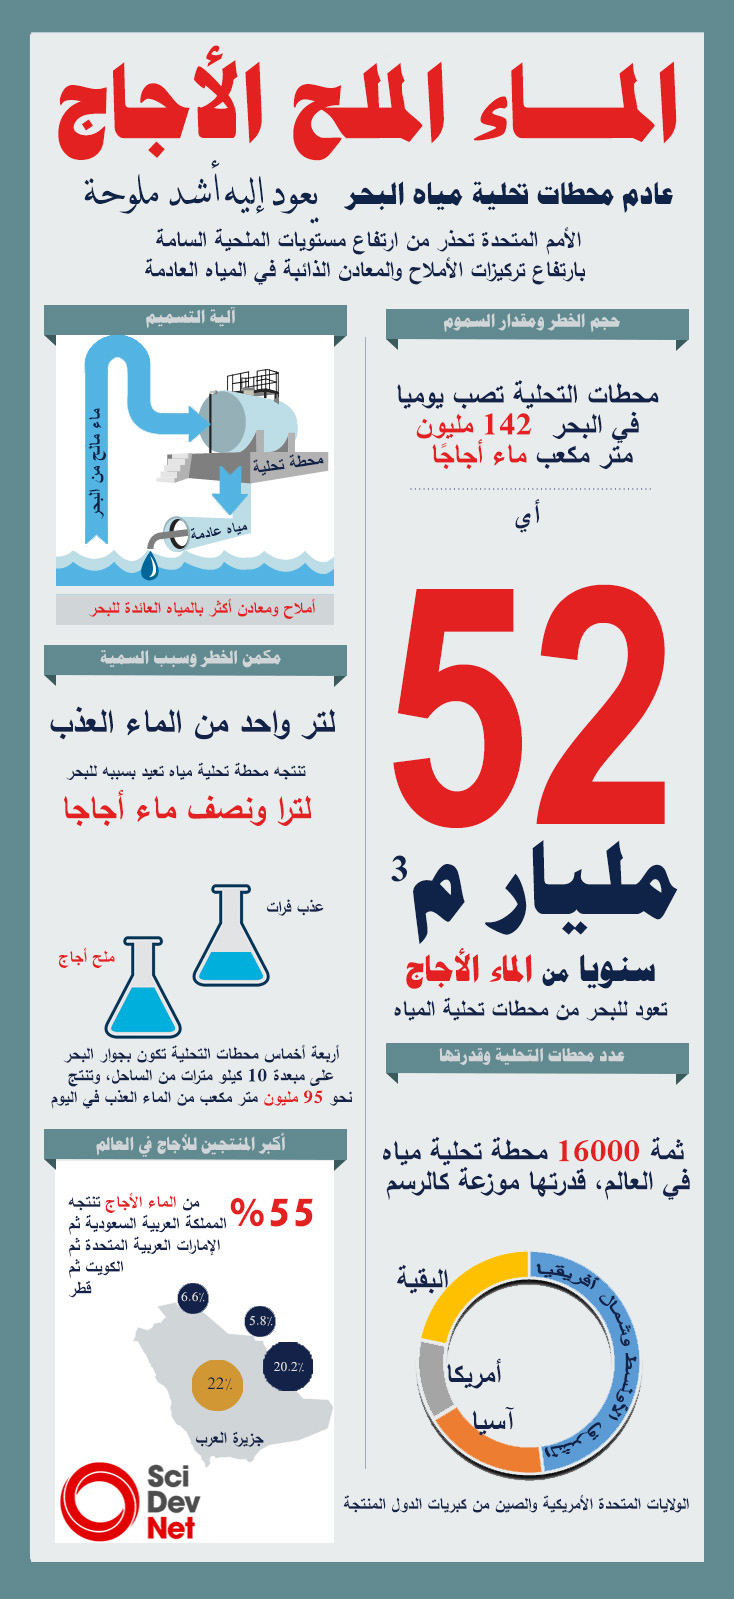 Desalination info